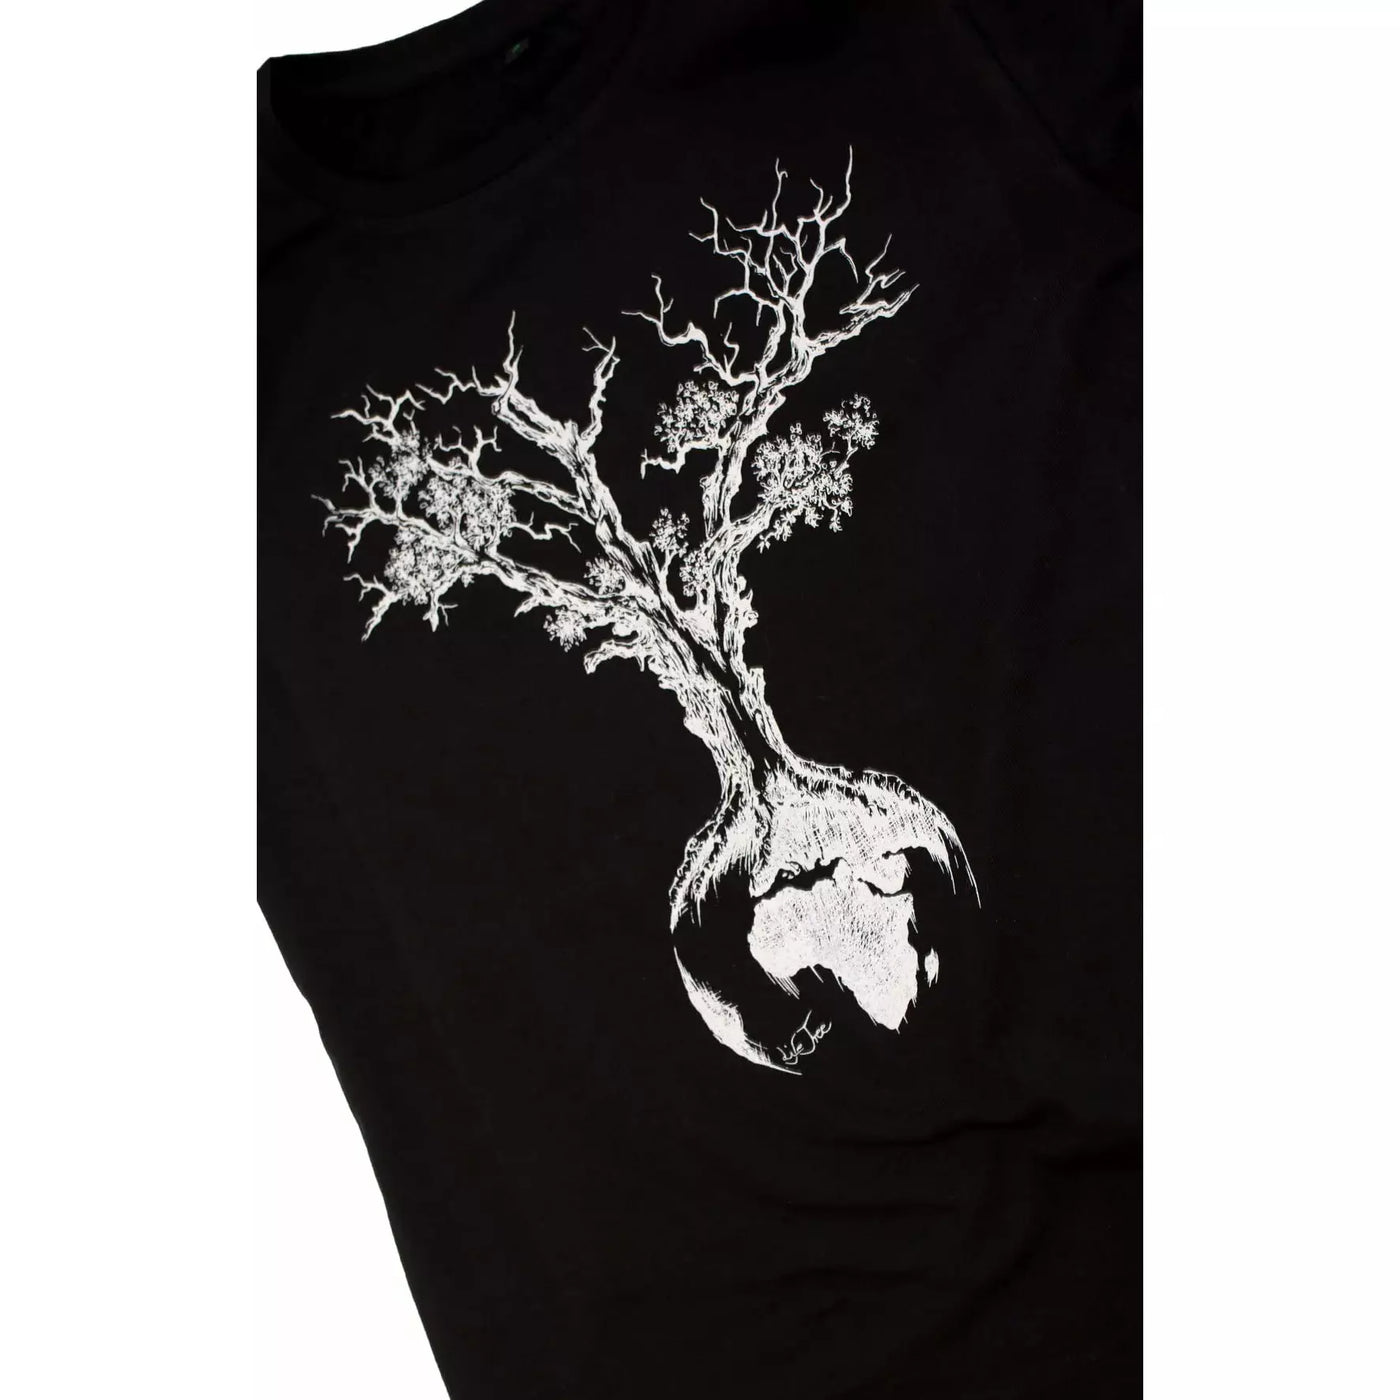 Fairwear Organic Shirt Men Black Weltenbaum